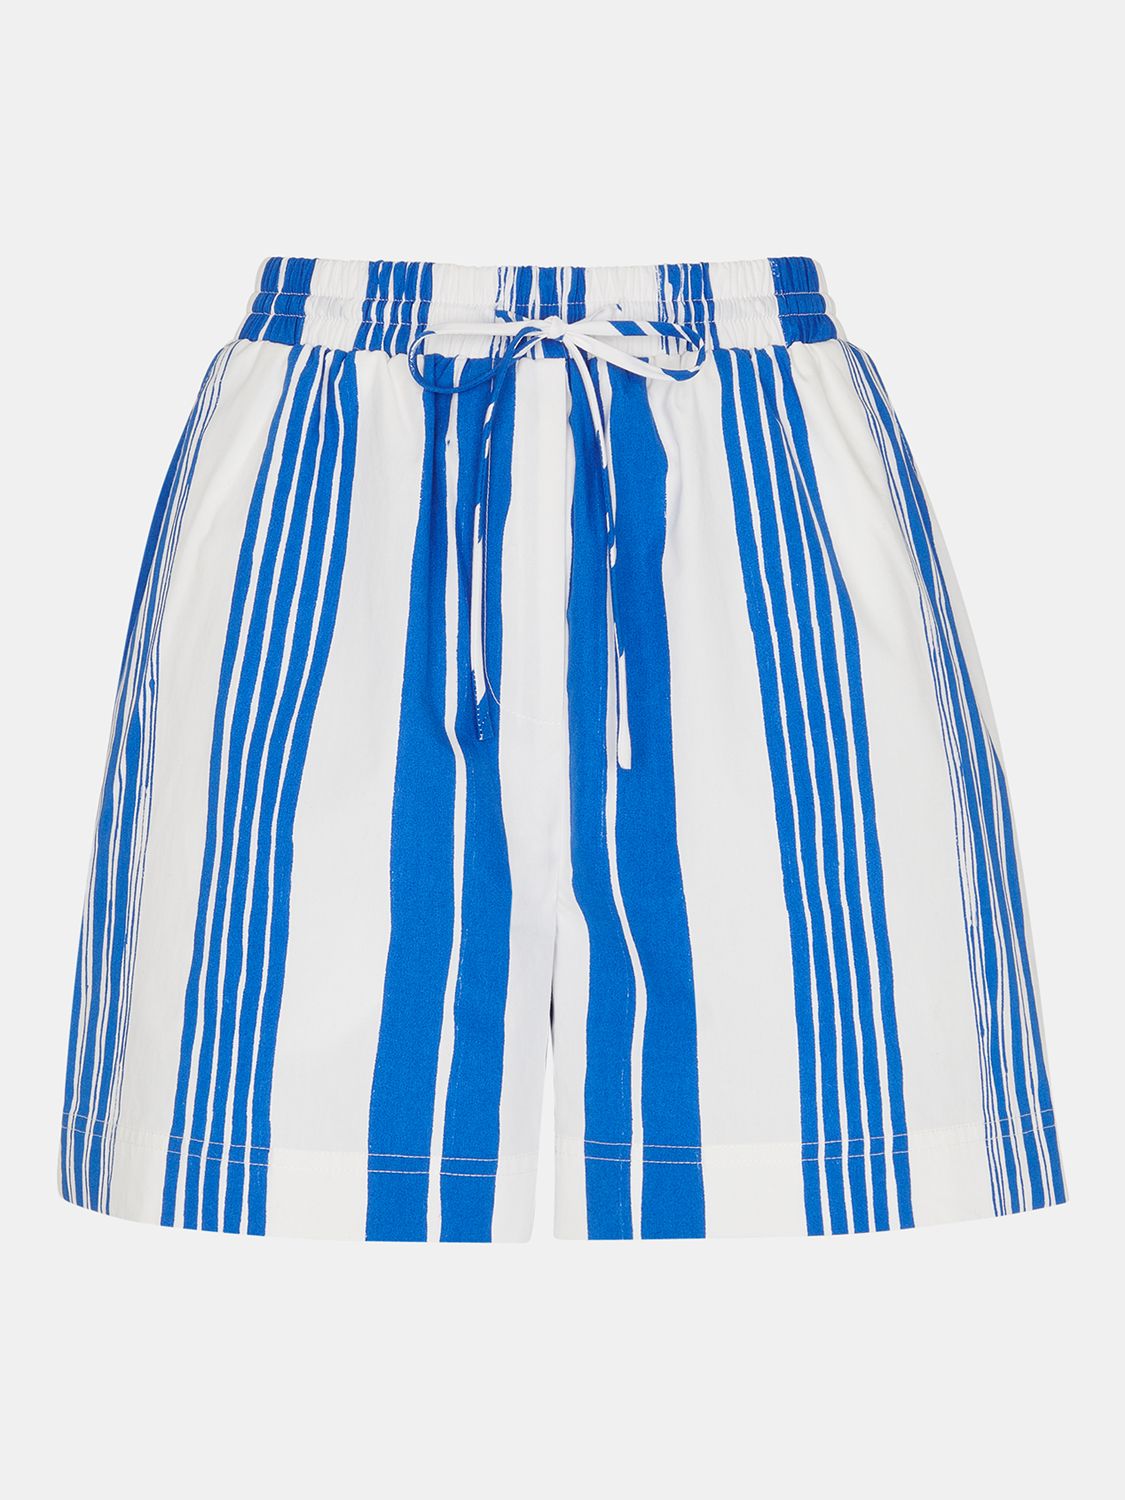 Whistles Painted Stripe Cotton Shorts, White/Blue, 6